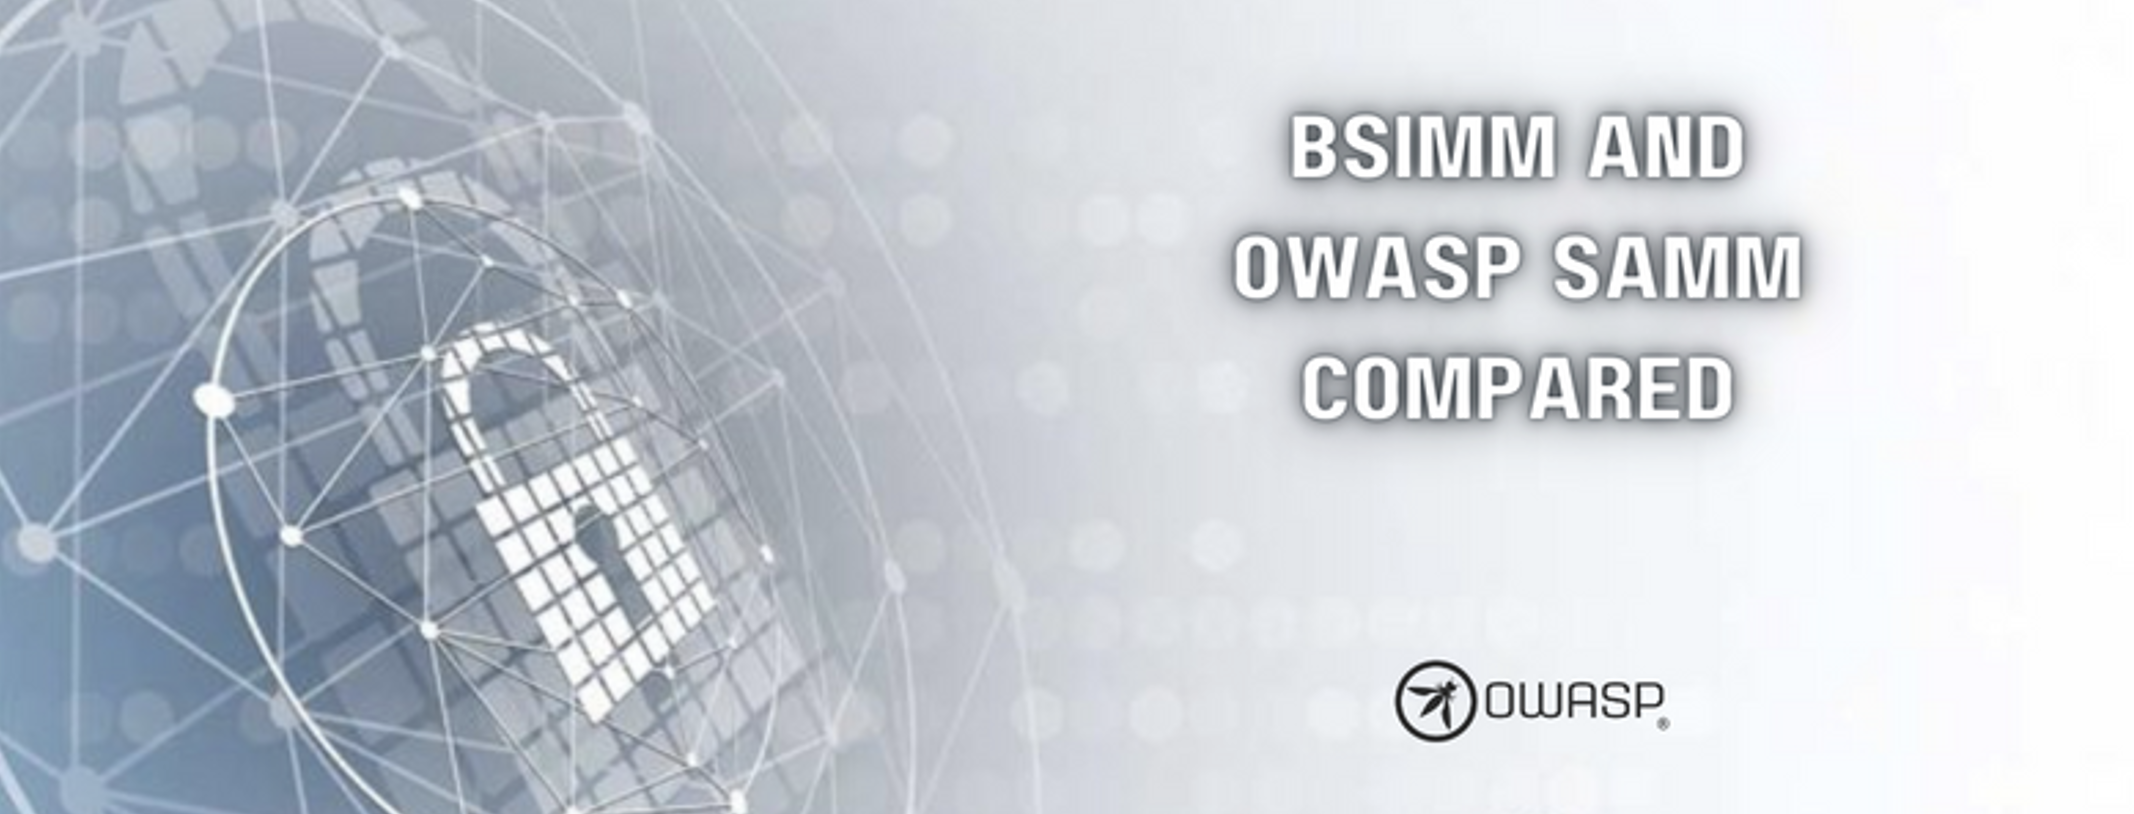 BSIMM and OWASP SAMM Compared